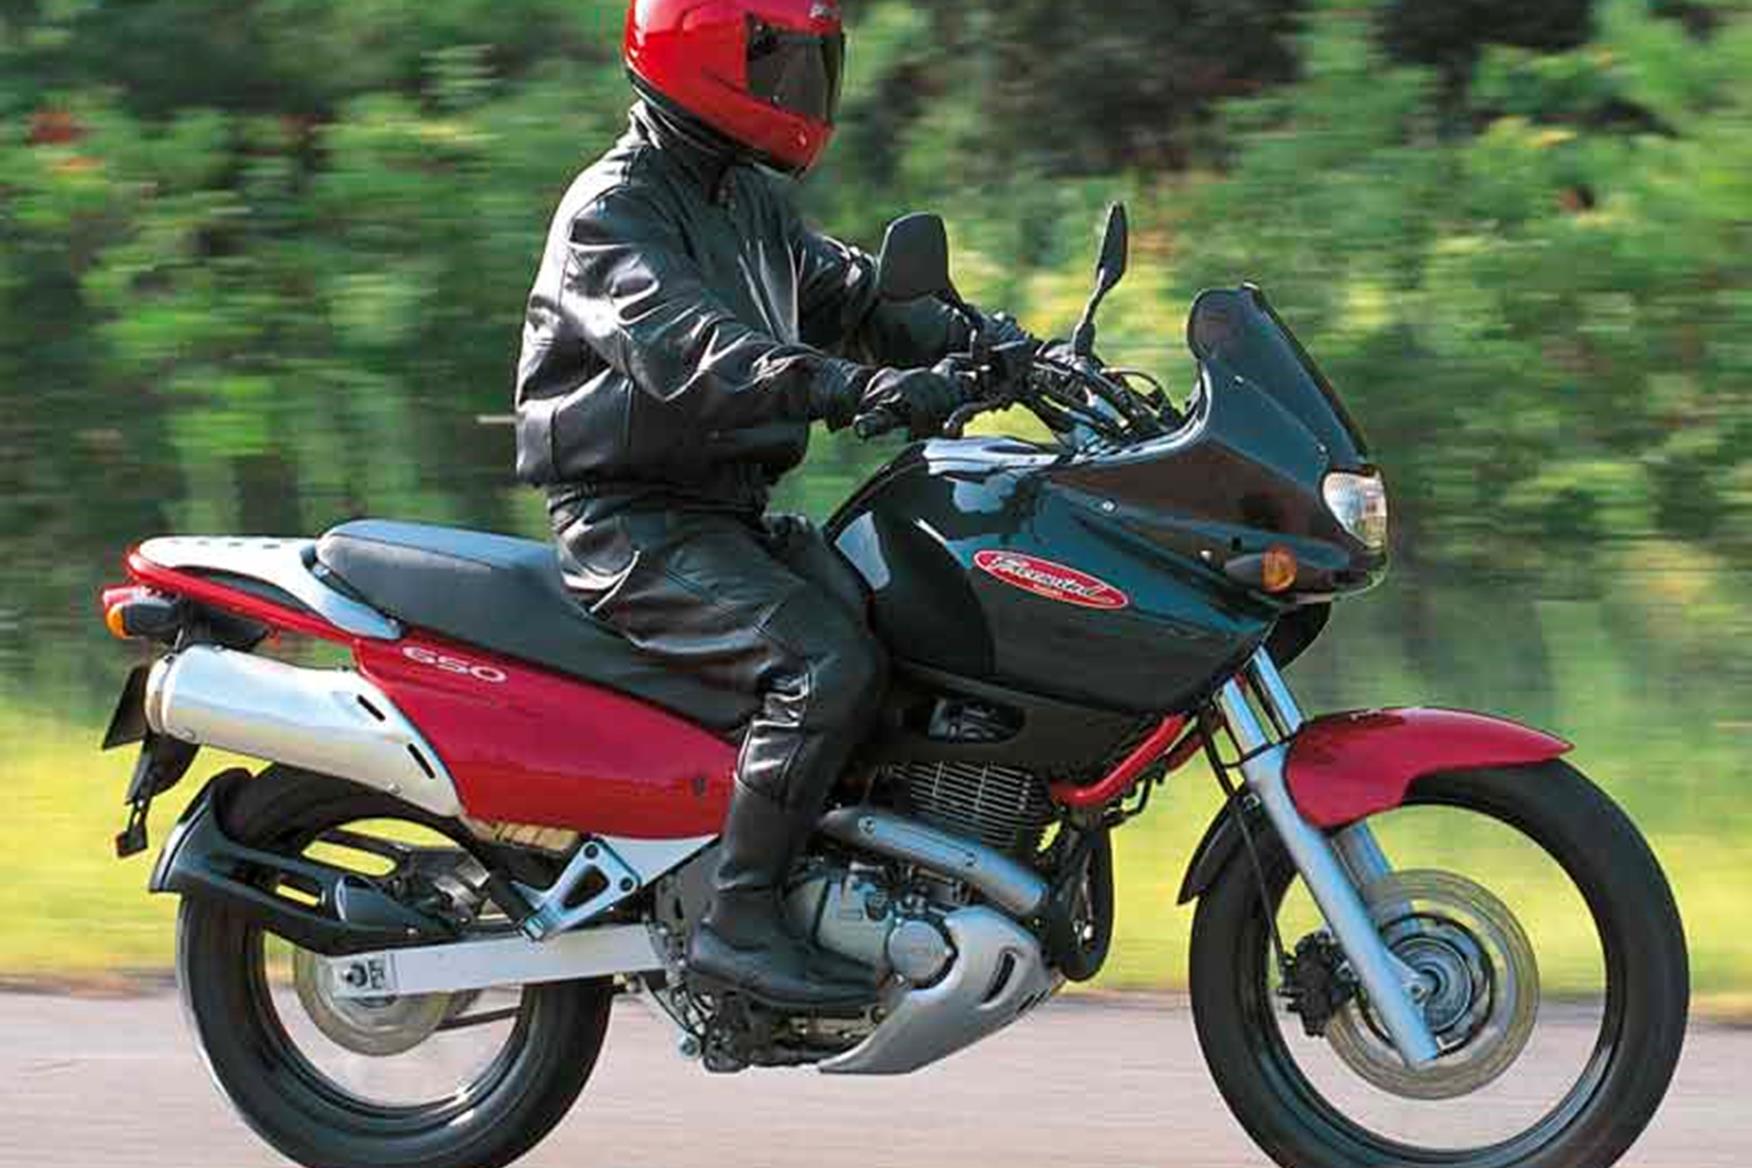 Suzuki xf650 freewind: review, history, specs - bikeswiki.com, japanese motorcycle encyclopedia